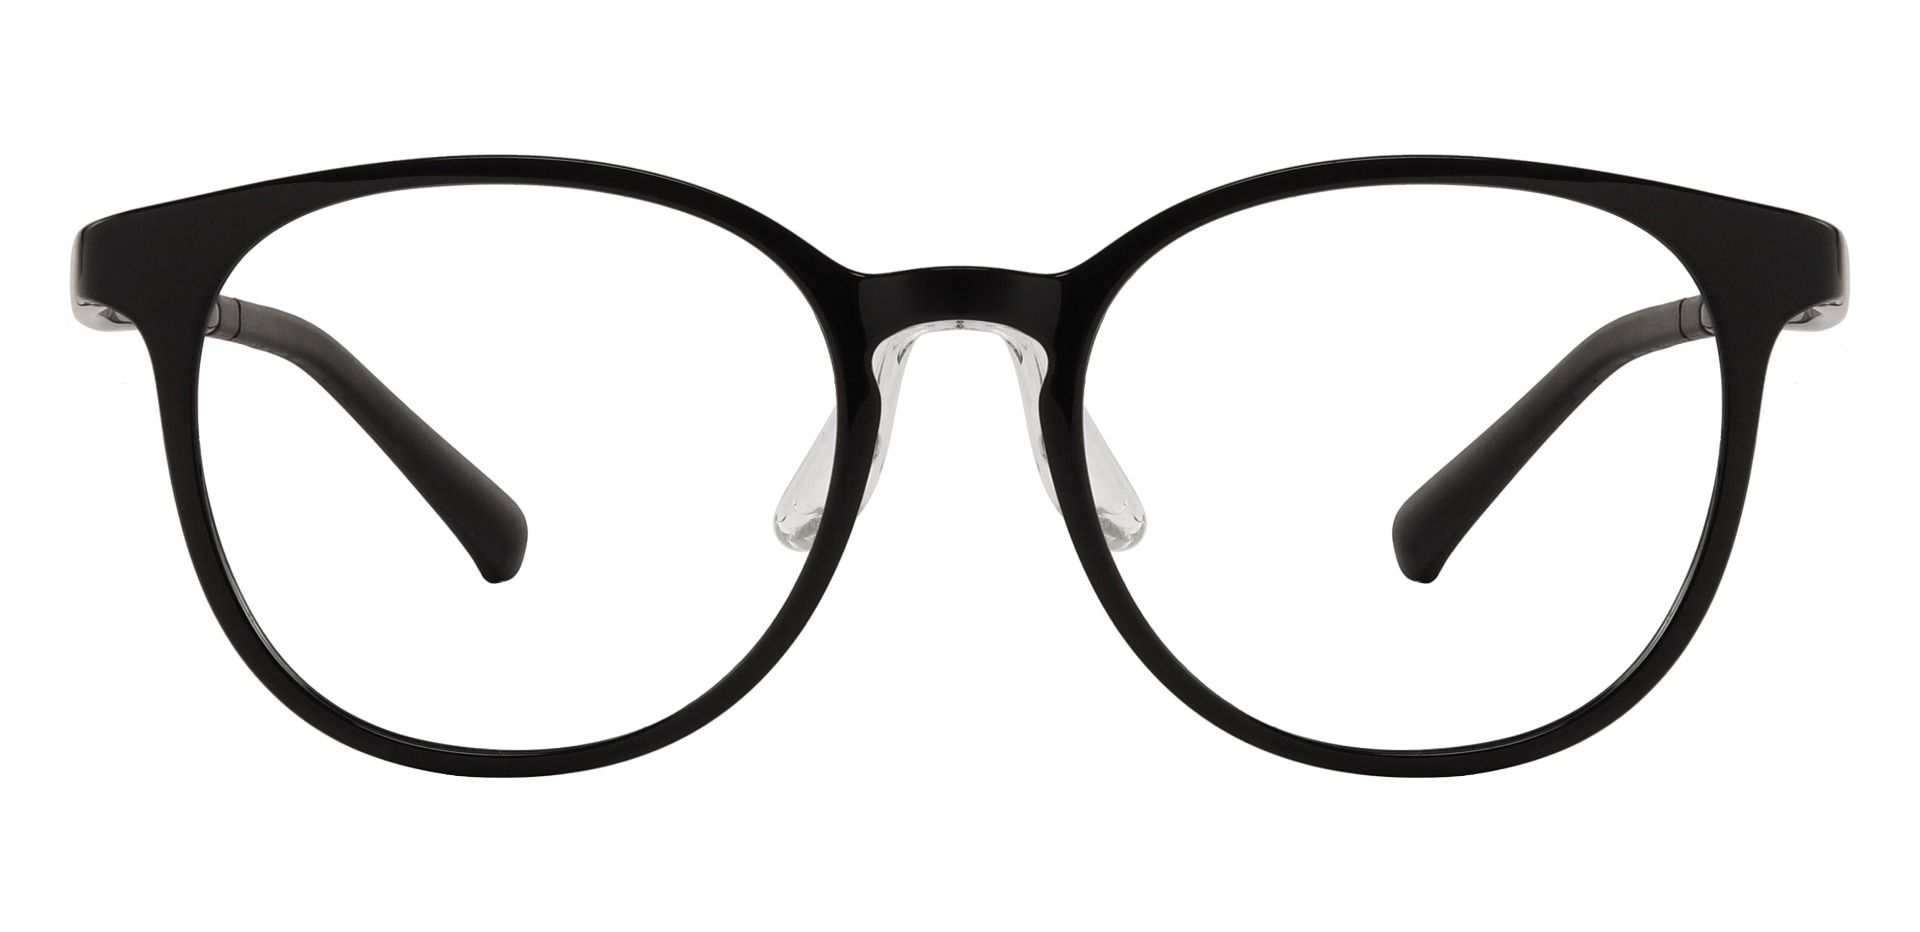 Ariel Round Prescription Glasses - Black | Kids' Eyeglasses | Payne Glasses